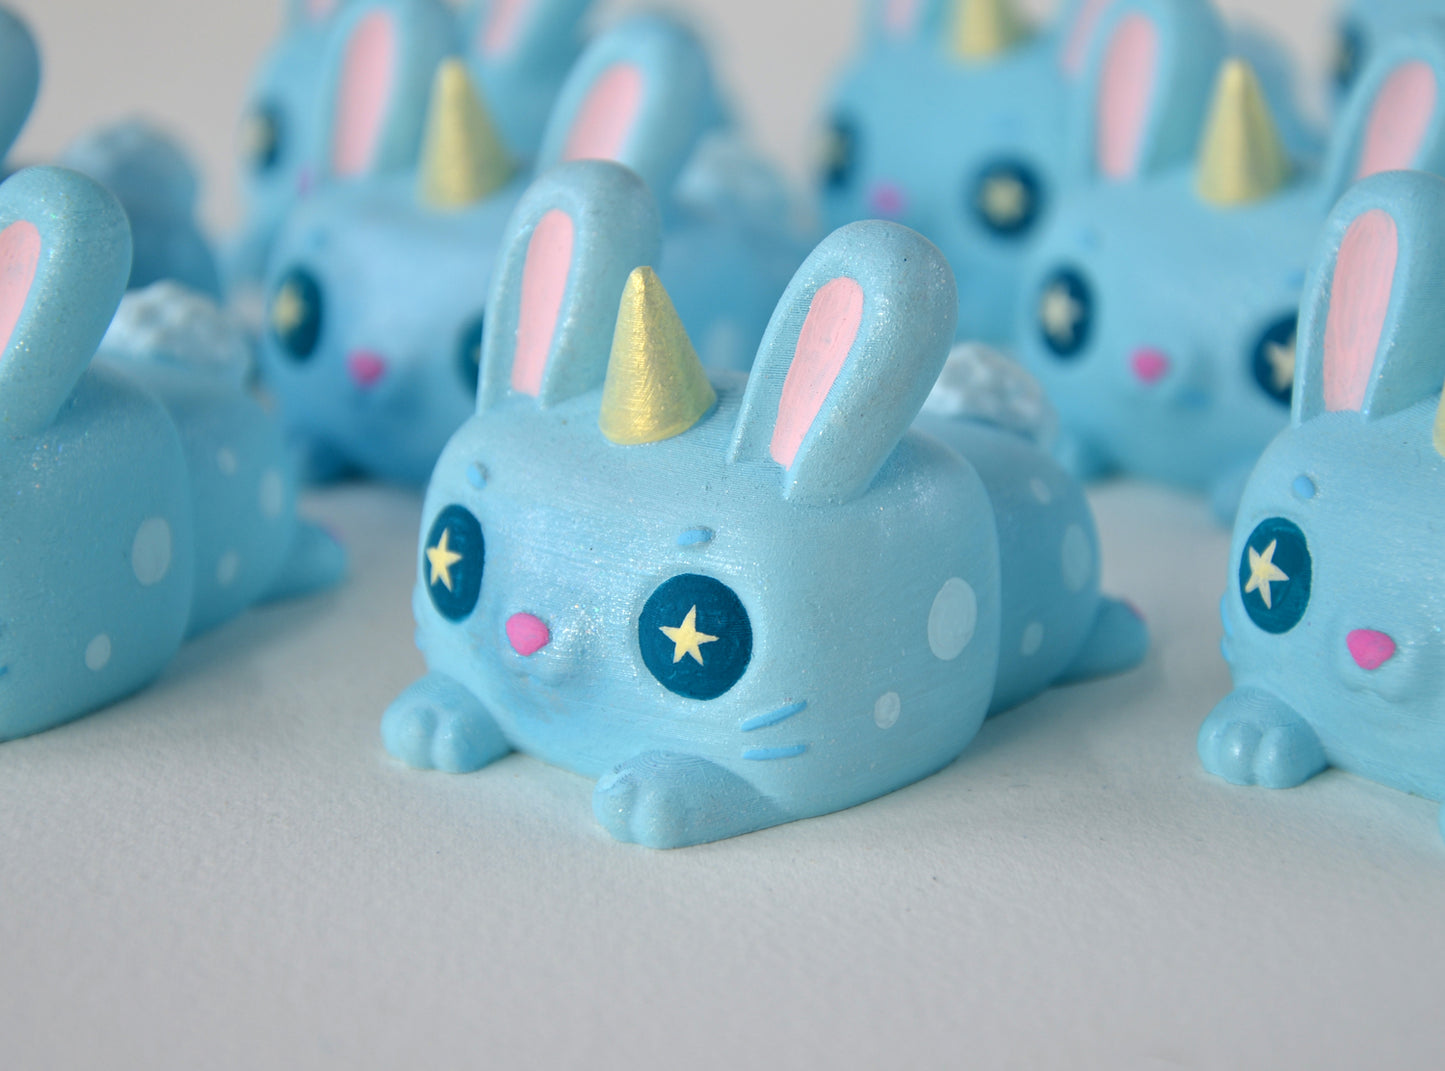 Unicorn Bunny Figure - Fluffy Blue